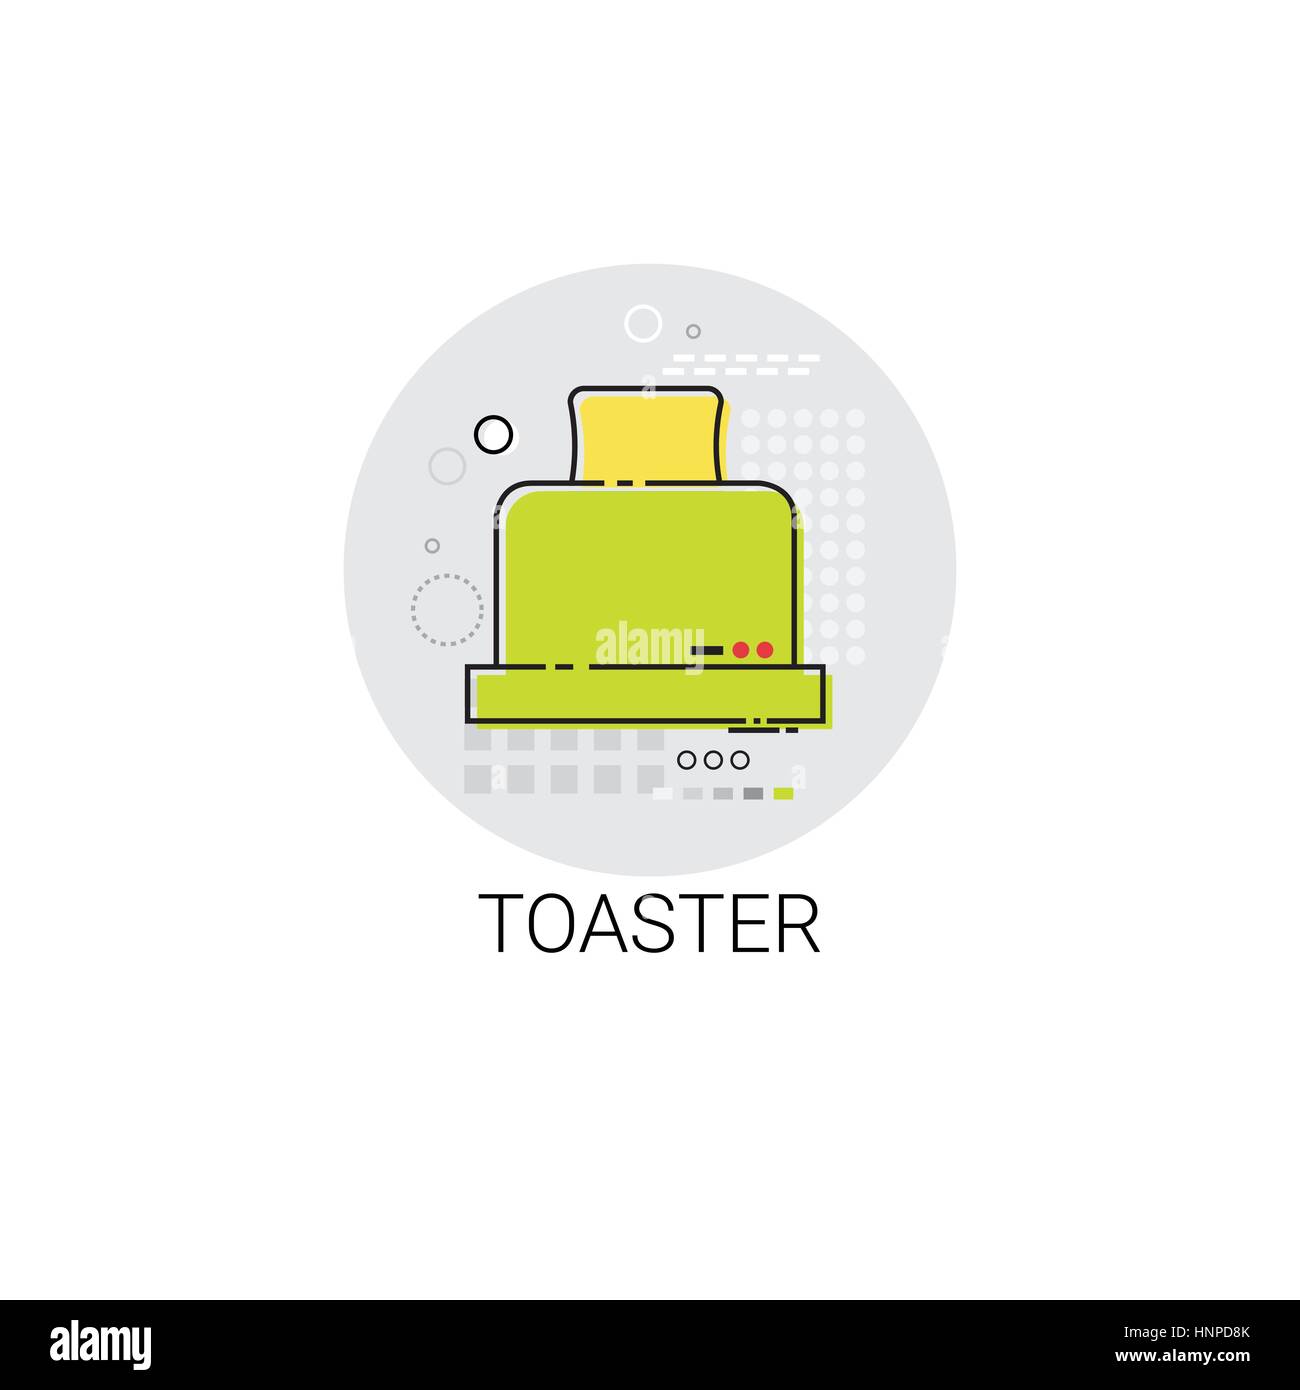 Toaster Cooking Utensils Kitchen Equipment Appliances Icon Stock Vector